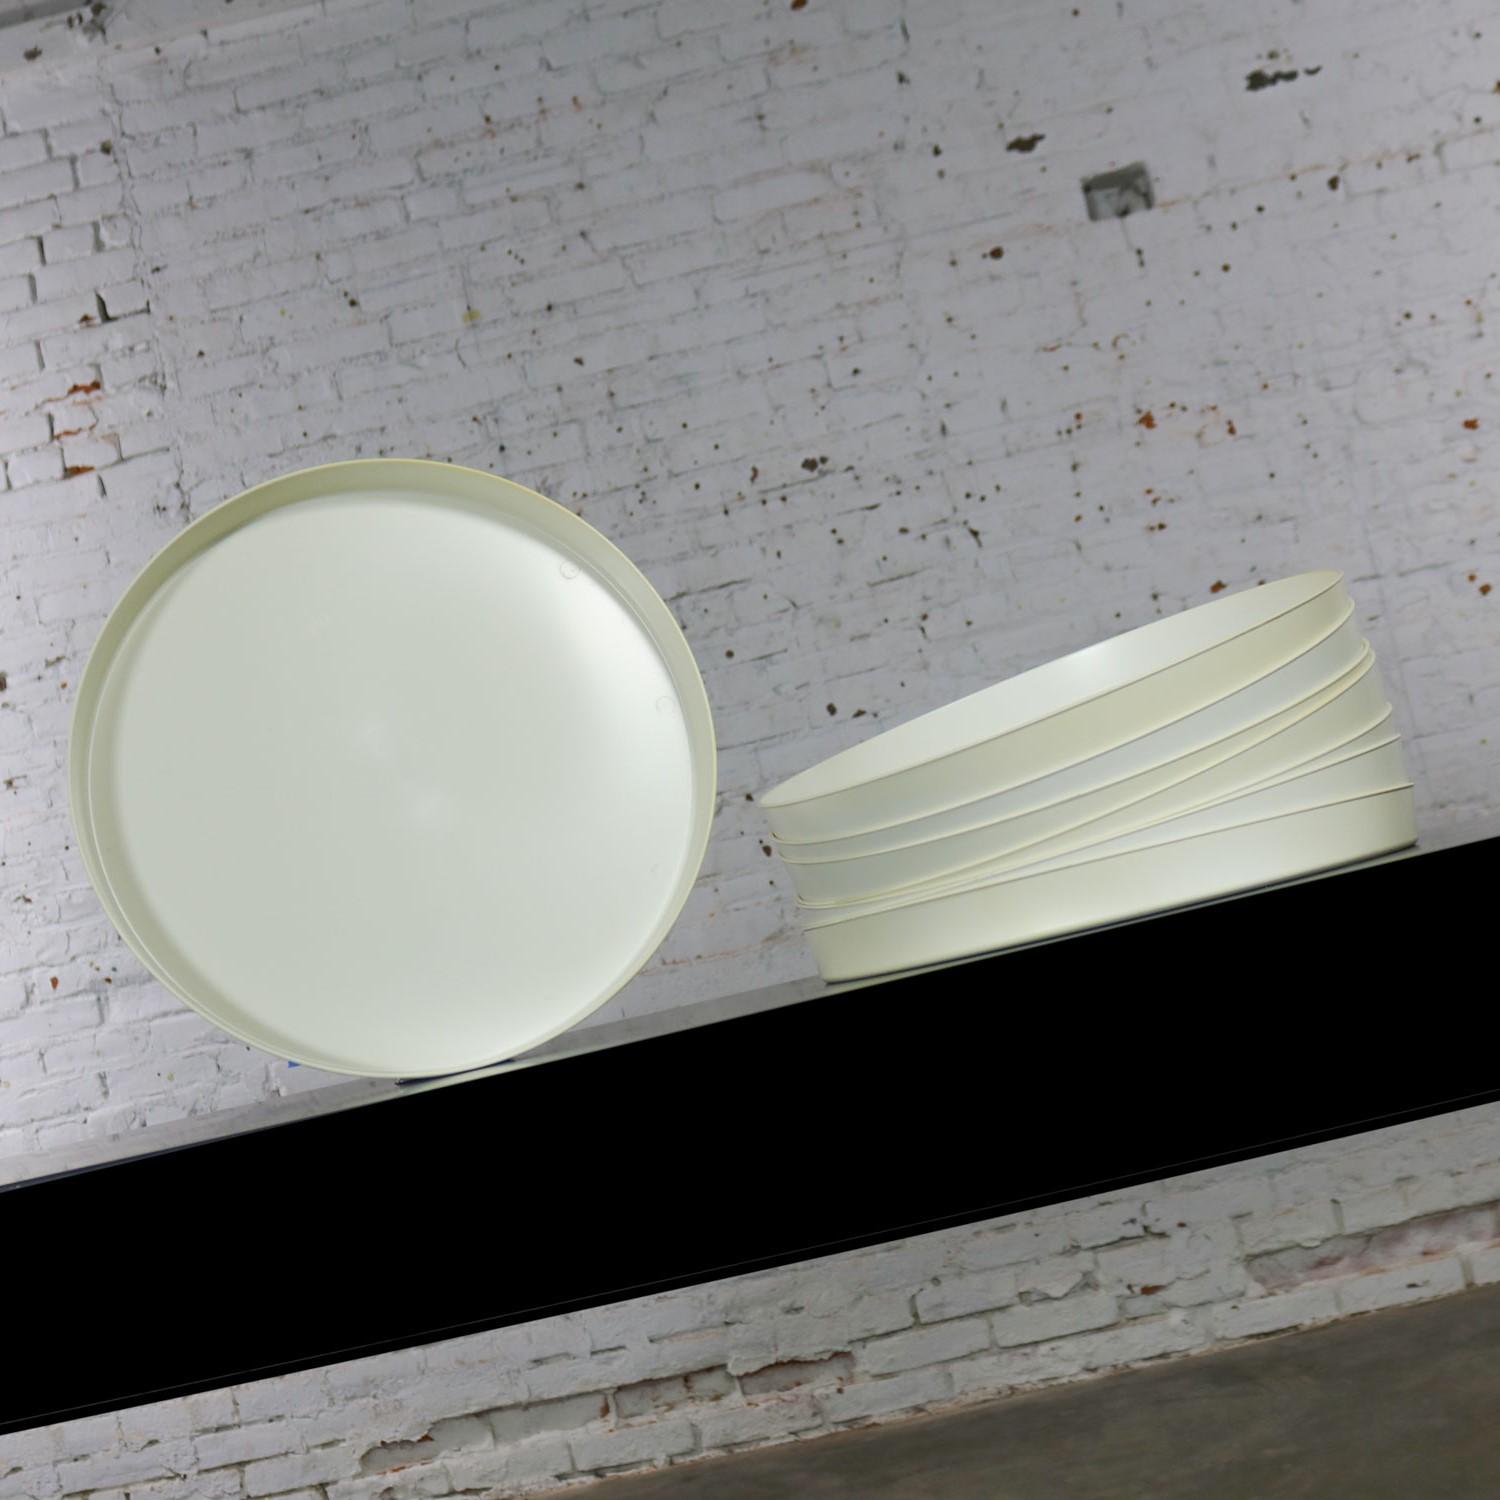 Molded Mid-Century Modern Trays Round White Plastic Splatter Platters by Sabe’s